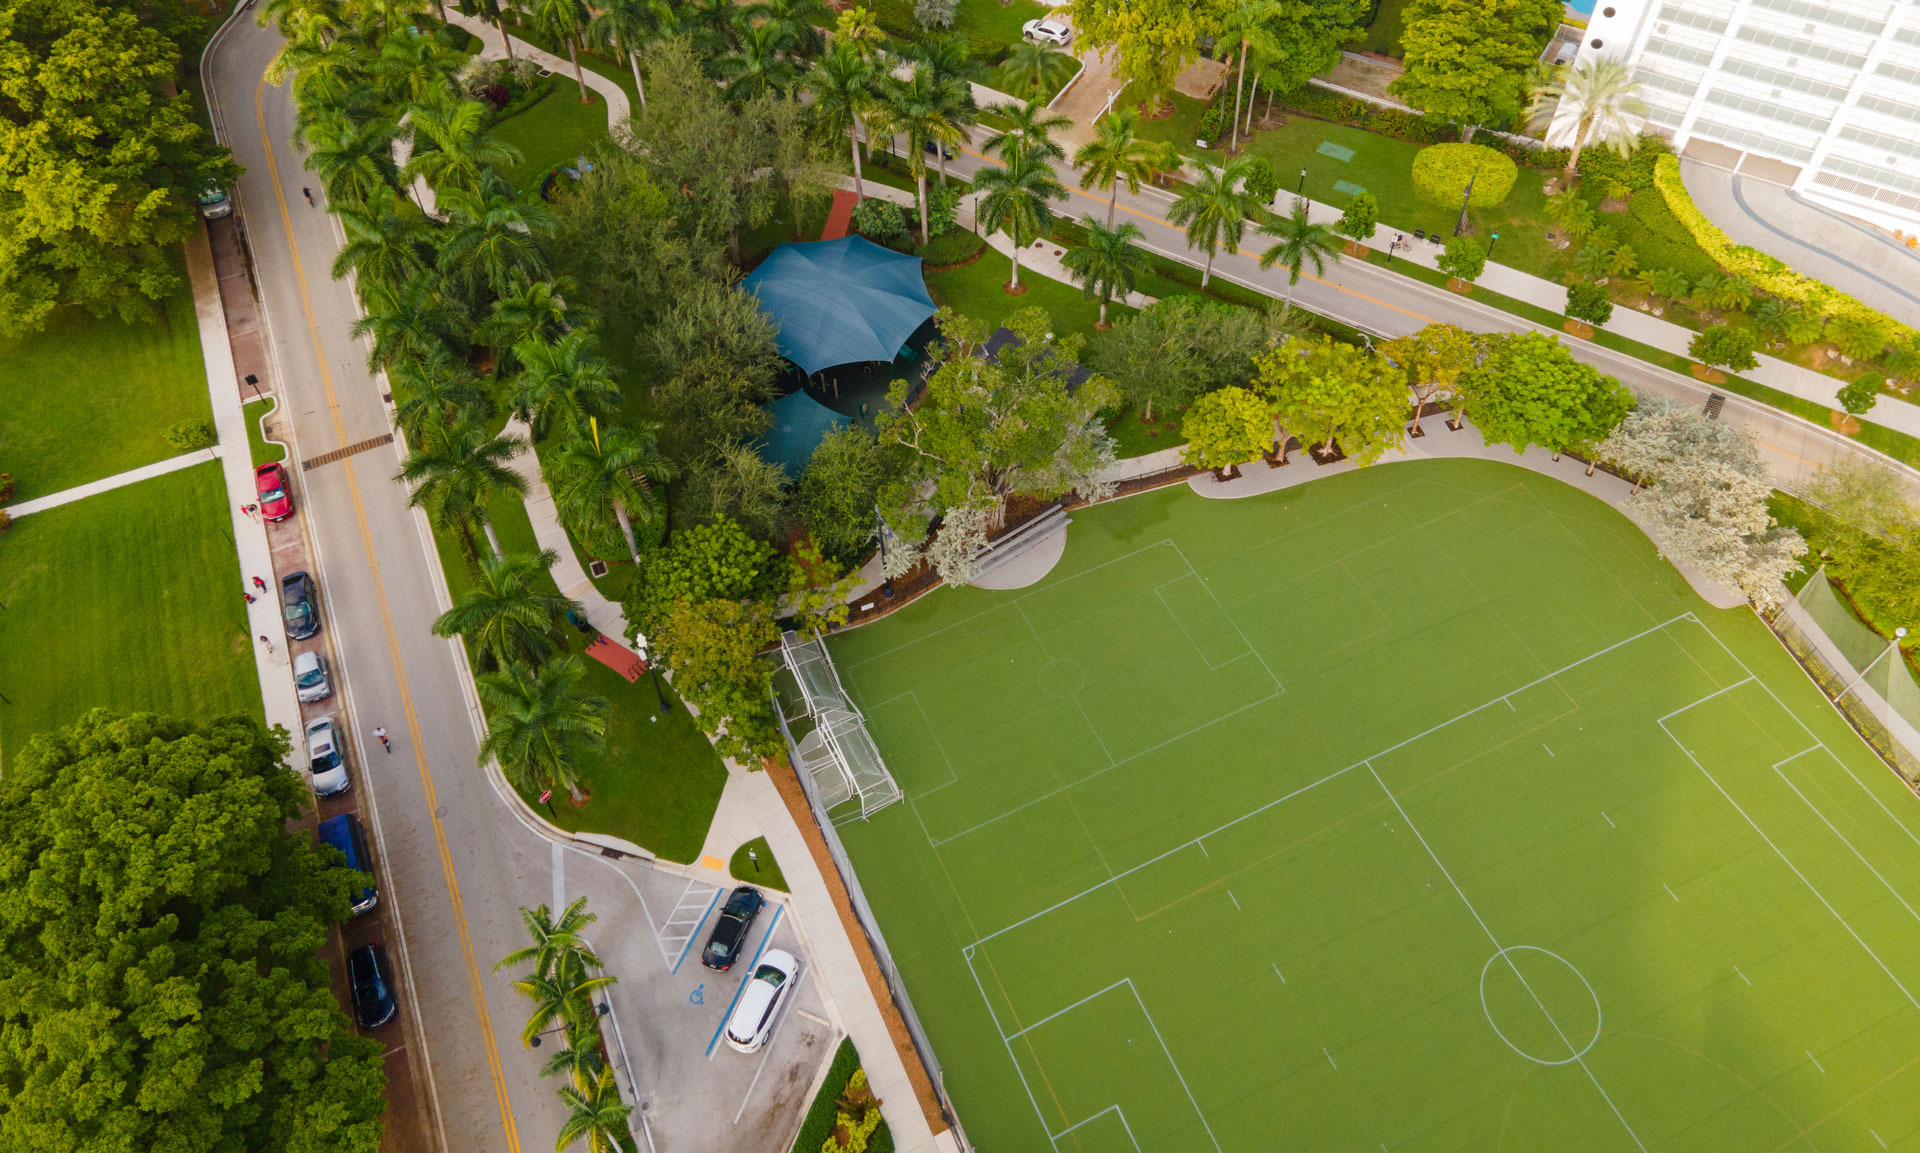 Gwen Margolis Park aerial of the soccer field